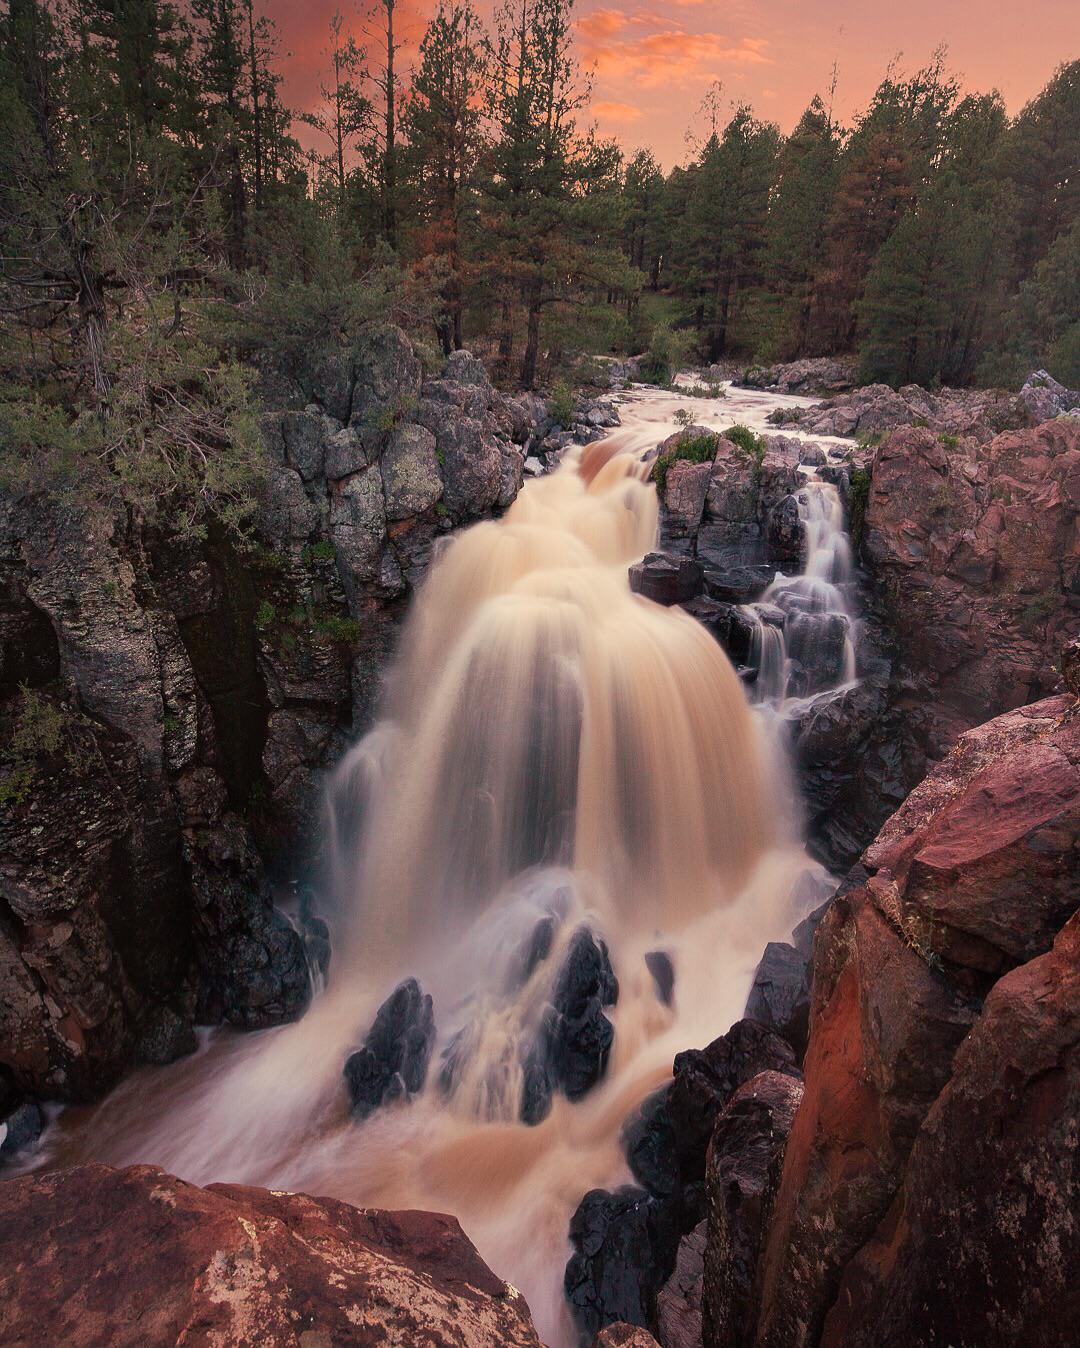 Monsoon season in Arizona is the best time for waterfalls, Flagstaff, AZ @chileno_hikertron